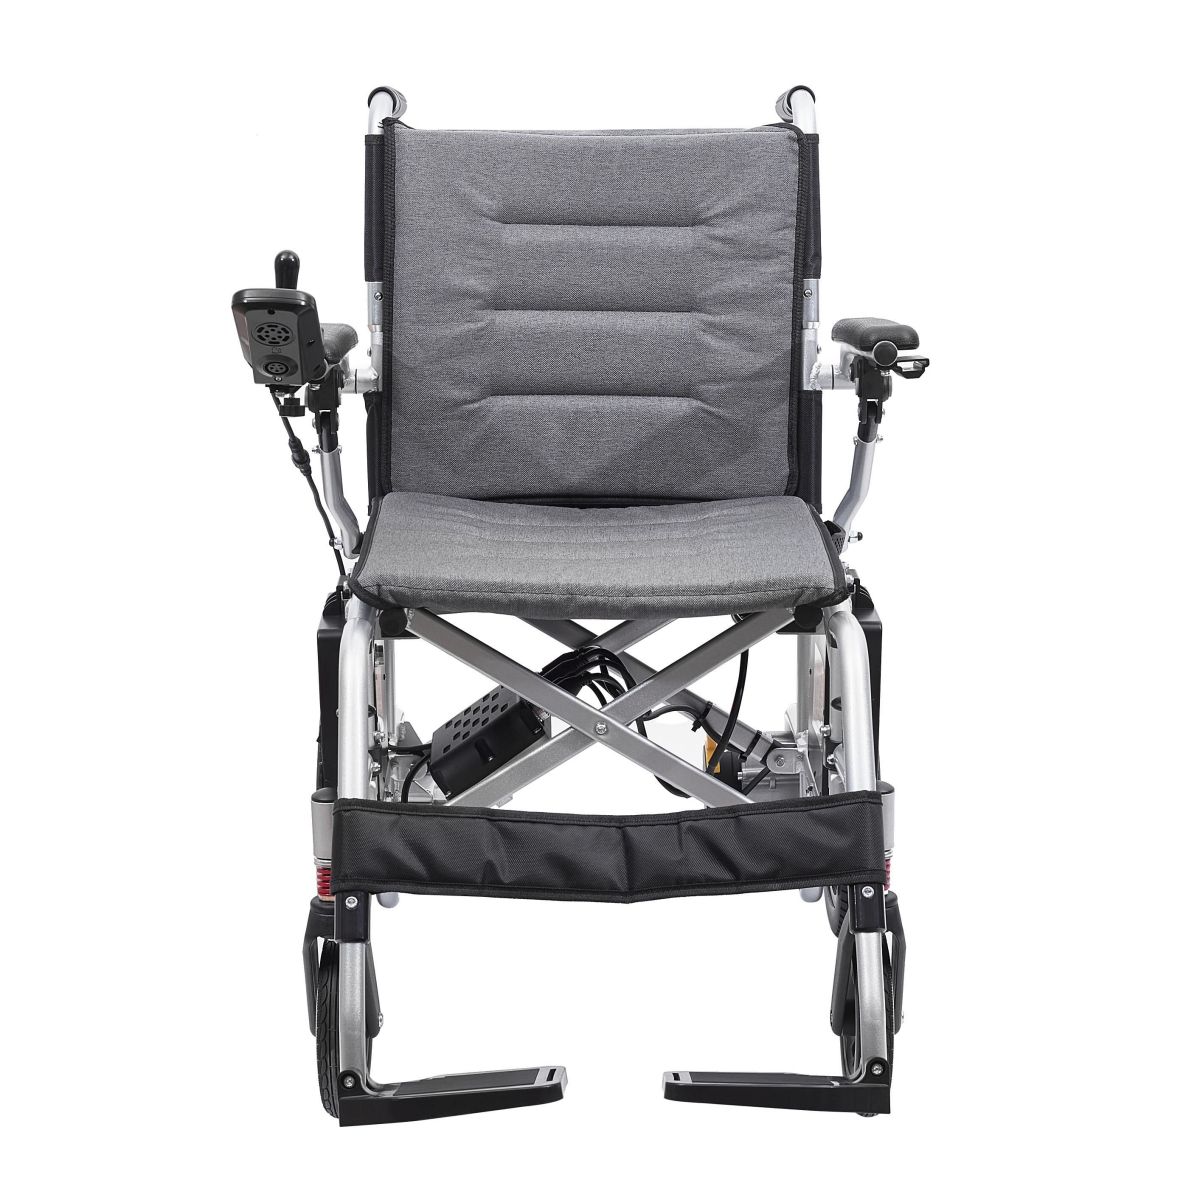 fábrica de sillas de ruedas eléctricas portátiles: seleccione una silla de ruedas eléctrica